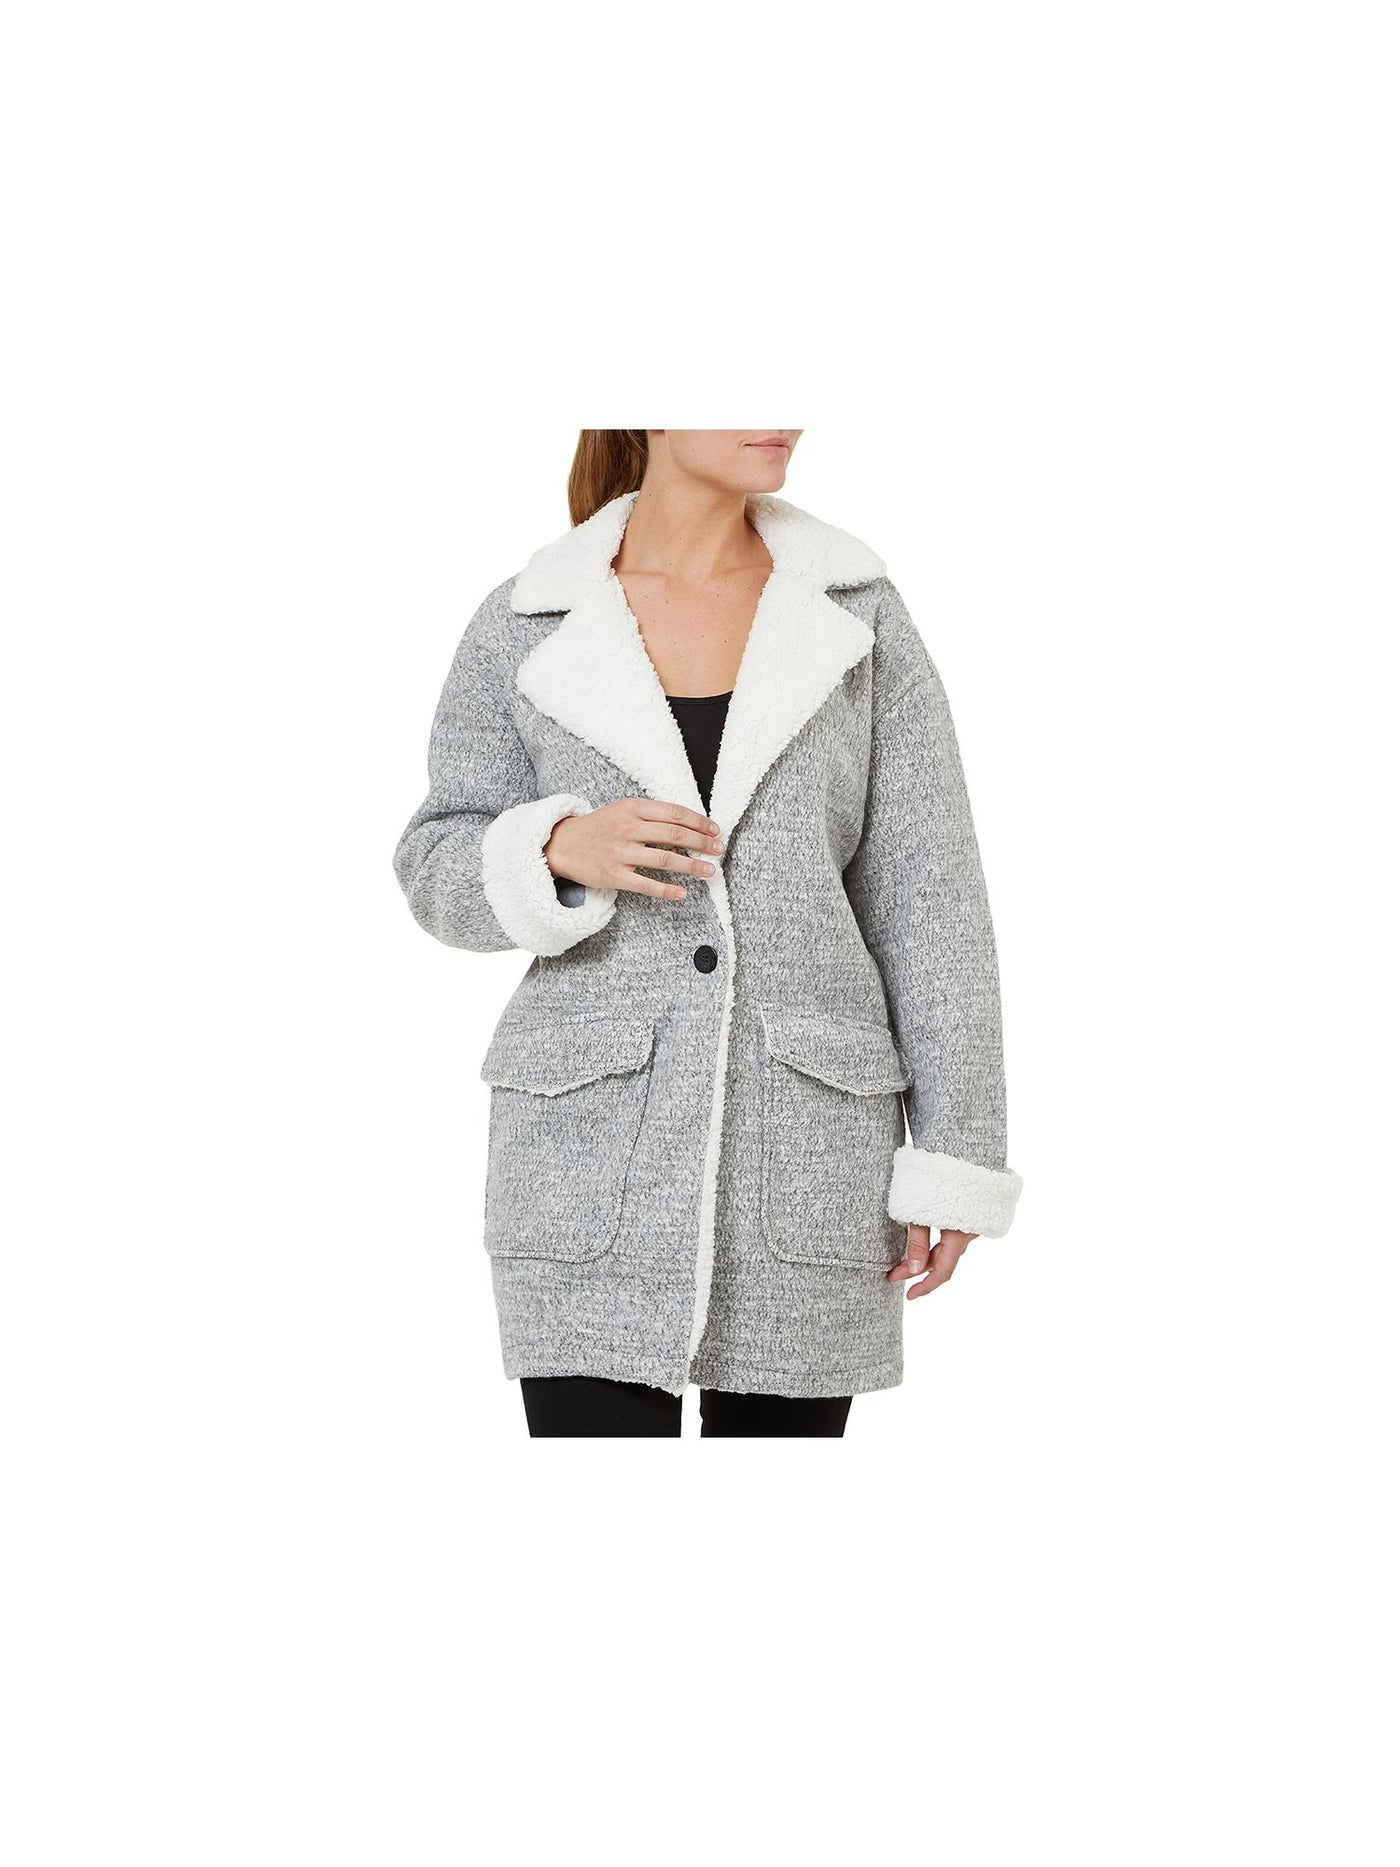 NUMERO Womens Gray Speckle Winter Jacket Coat M